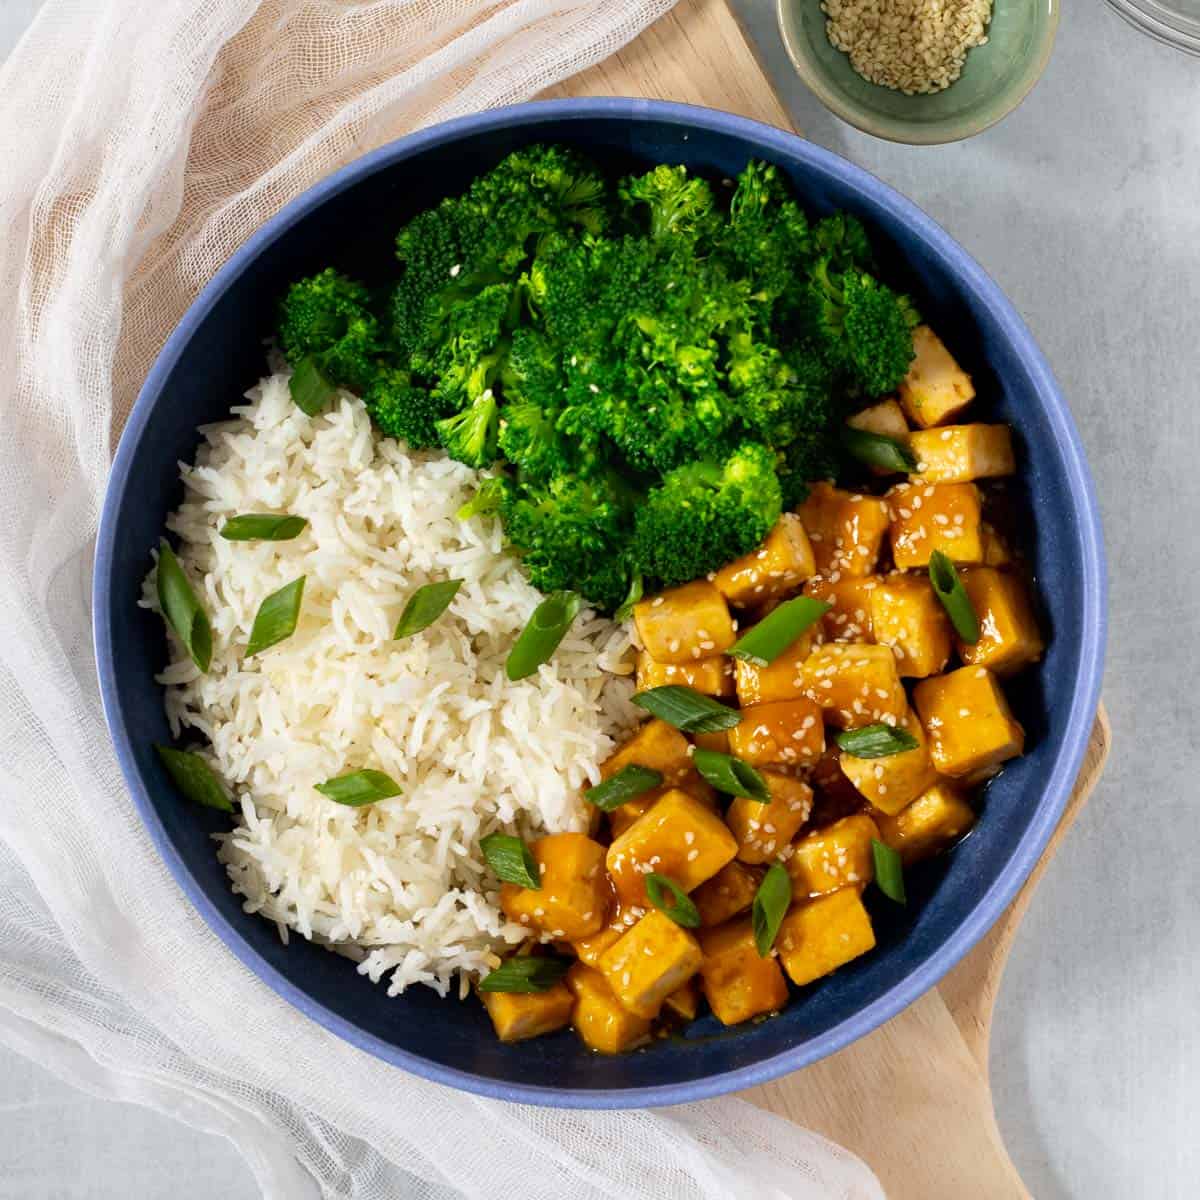 Bowl of orange tofu, broccoli, and rice.